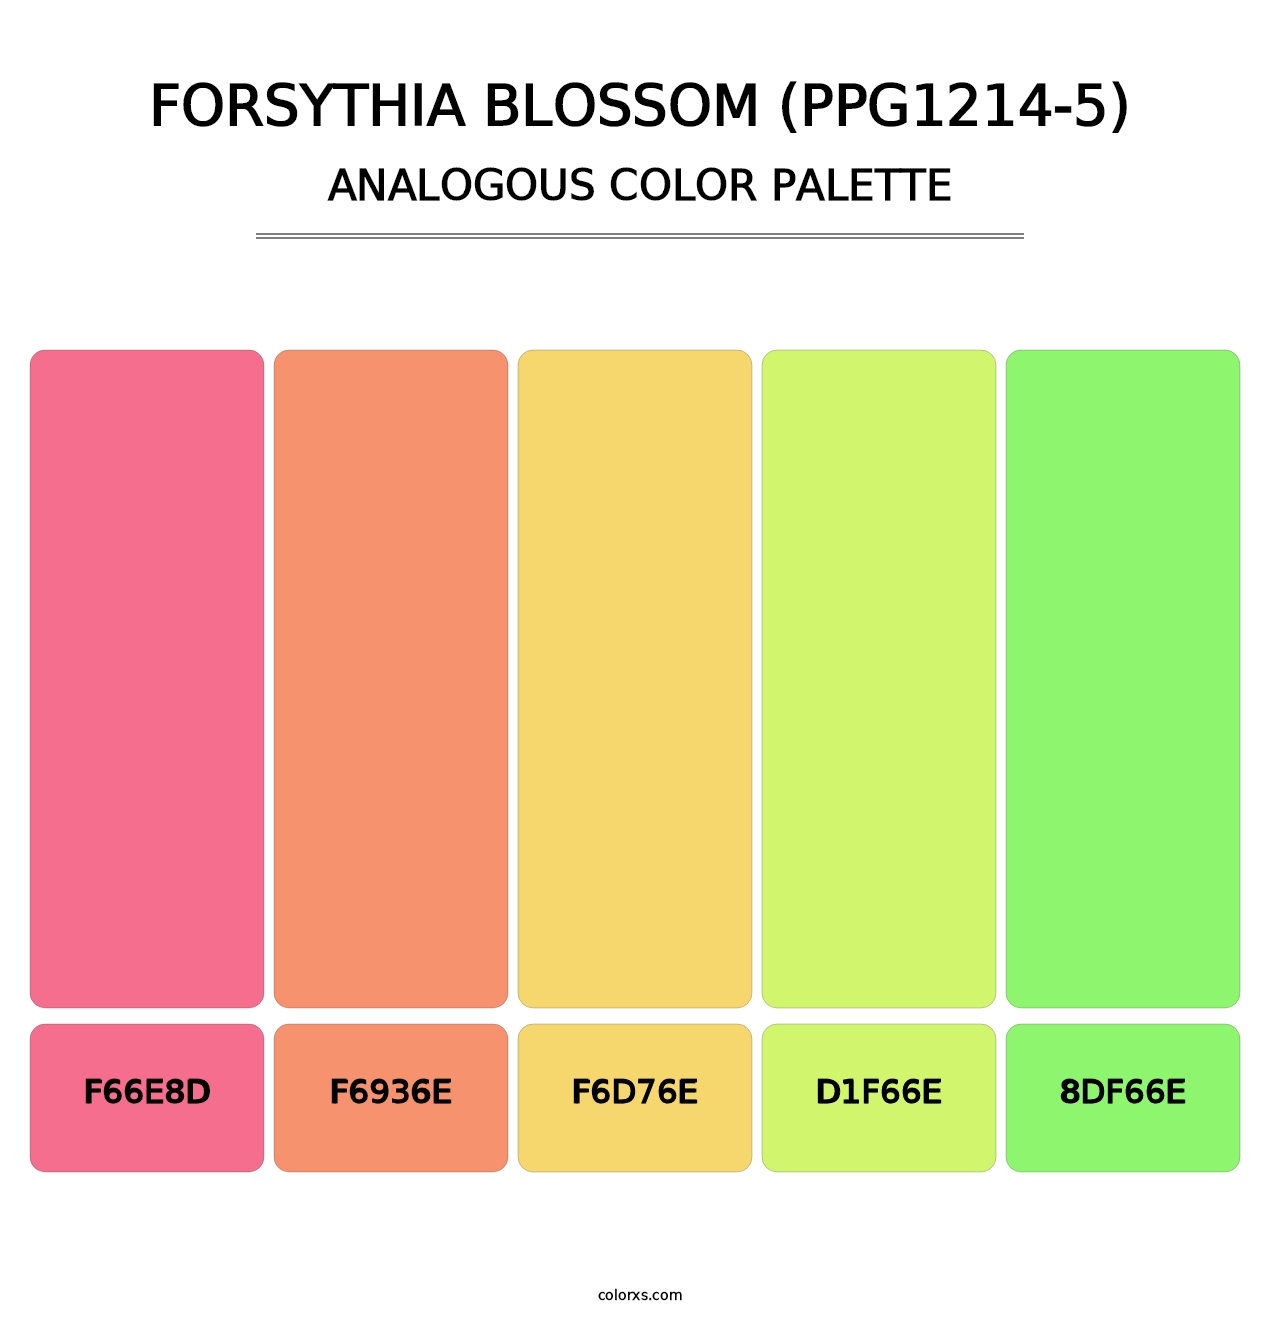 Forsythia Blossom (PPG1214-5) - Analogous Color Palette